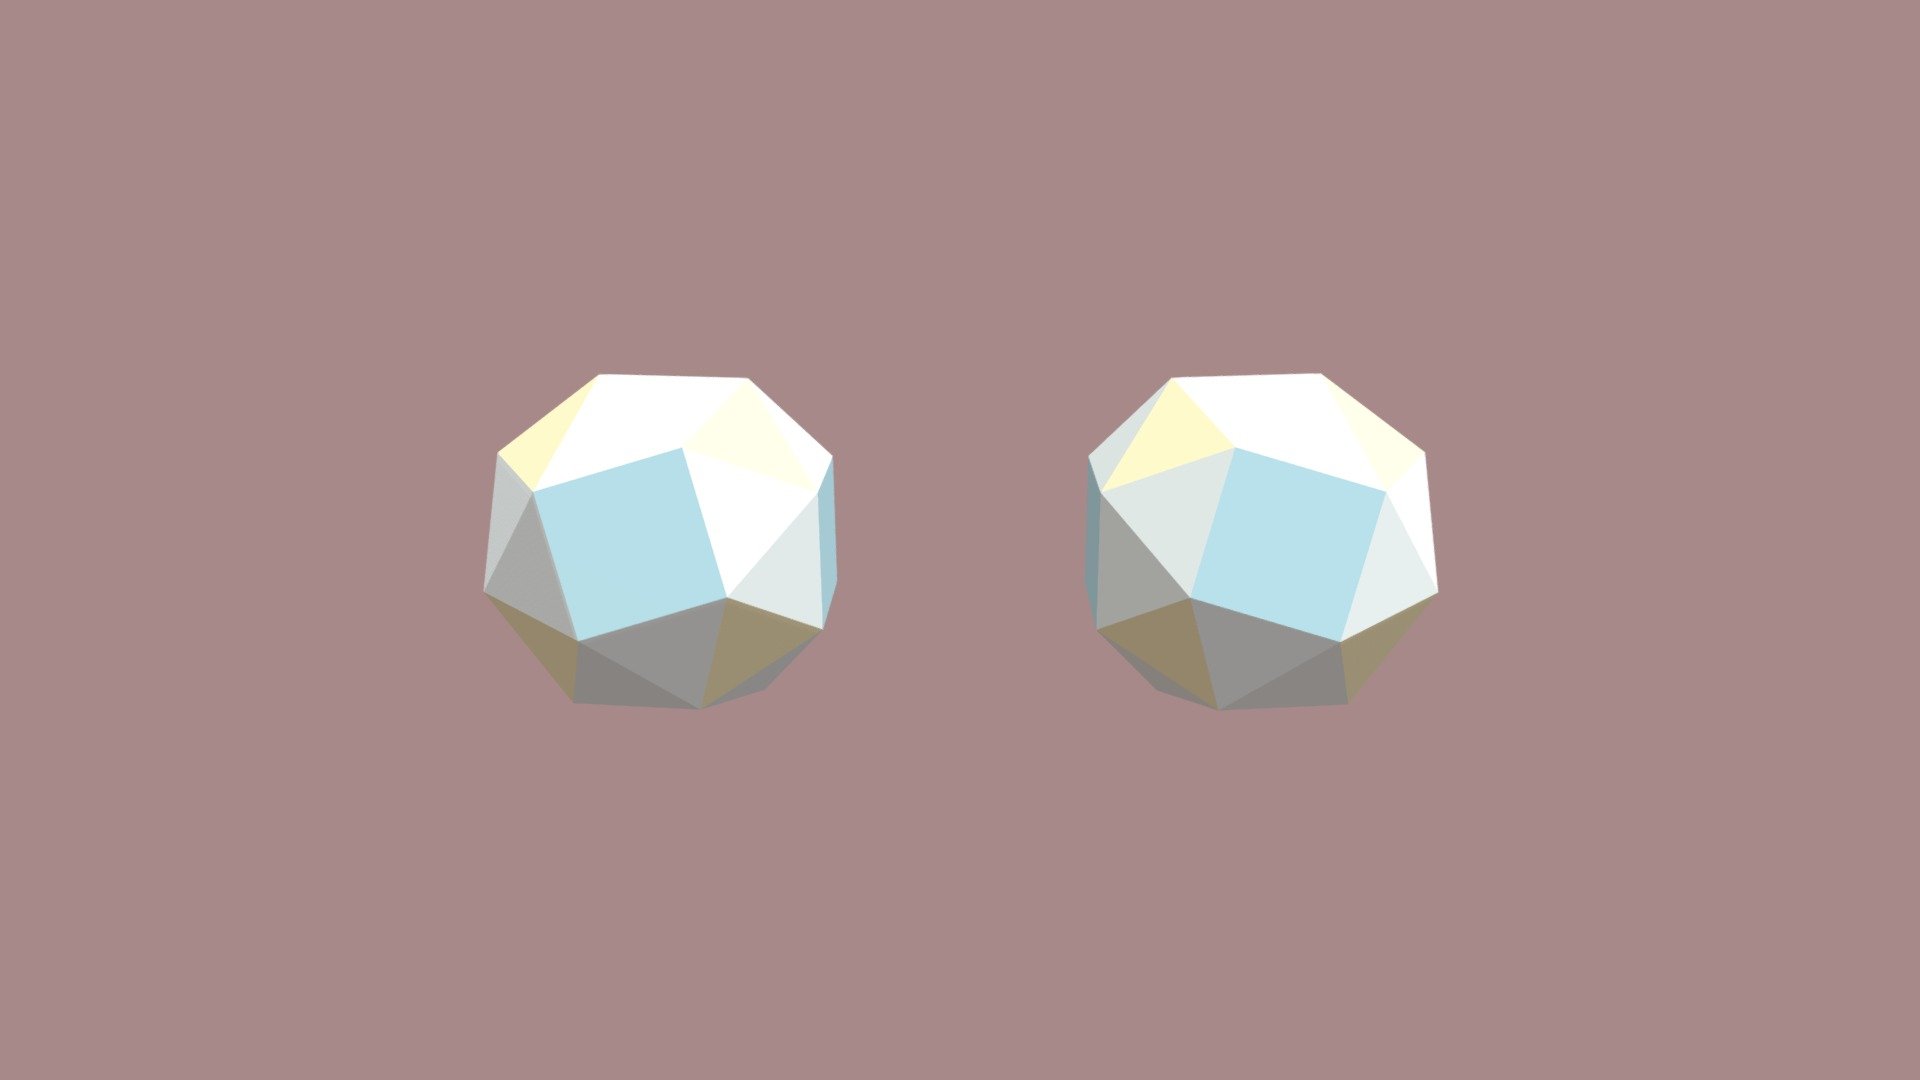 Snub Cube Mirrored Twins